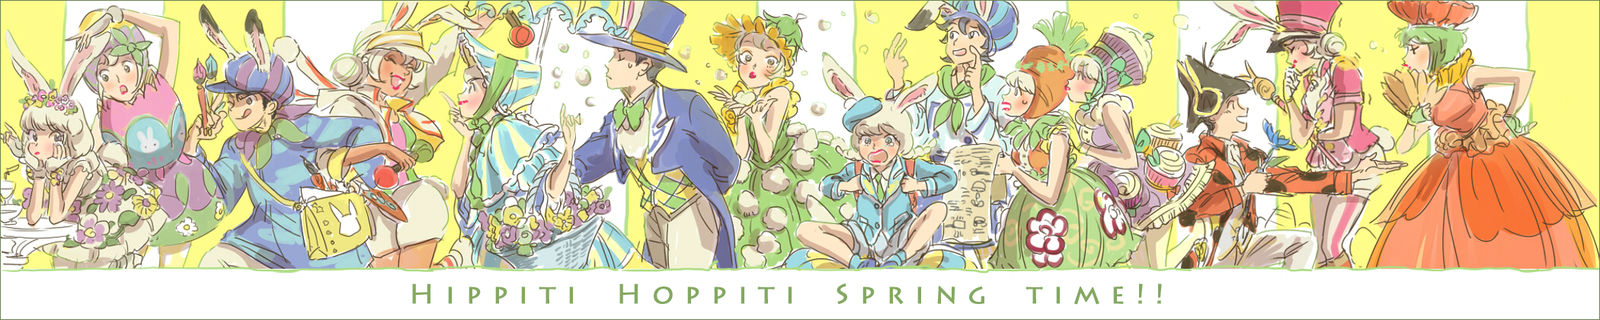 Hippiti Hoppiti spring time!插画图片壁纸